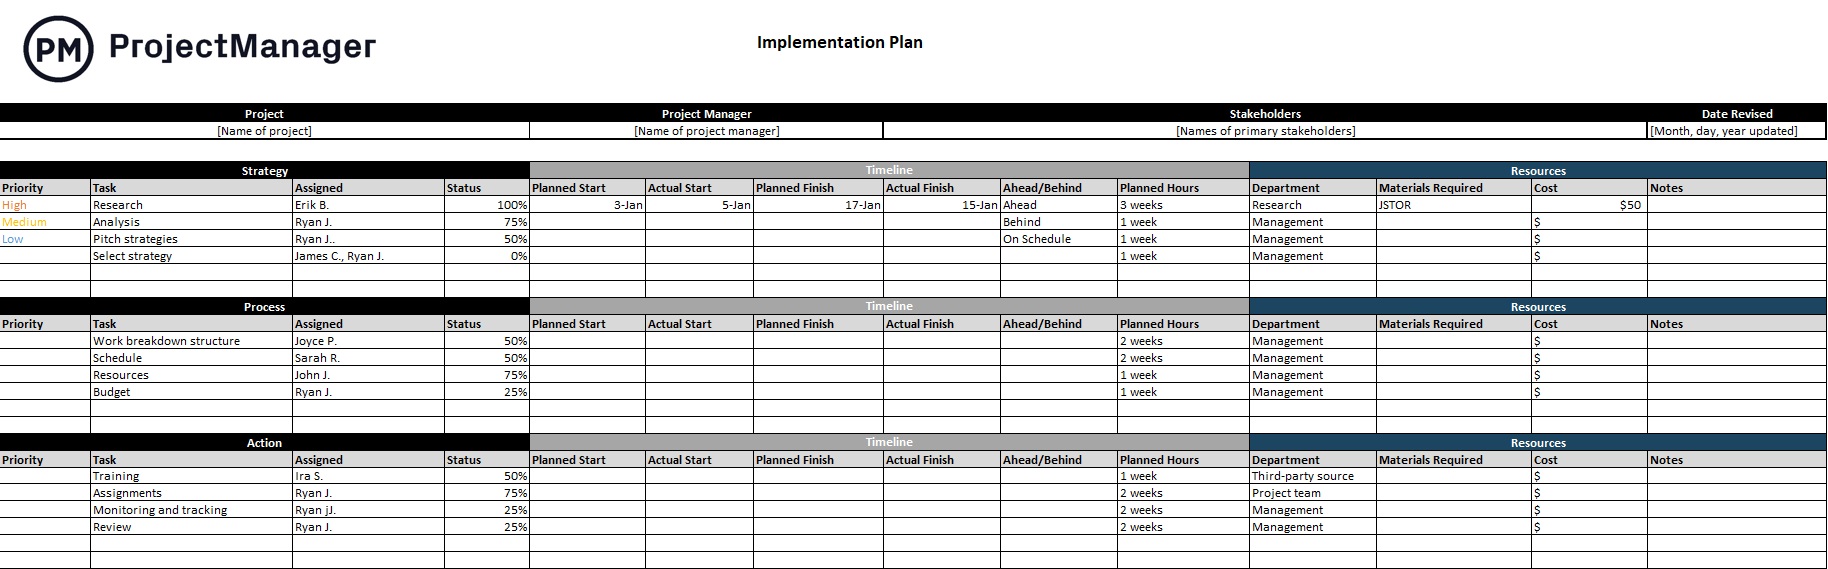 Excel Implementation Plan Template Software Proposal 143